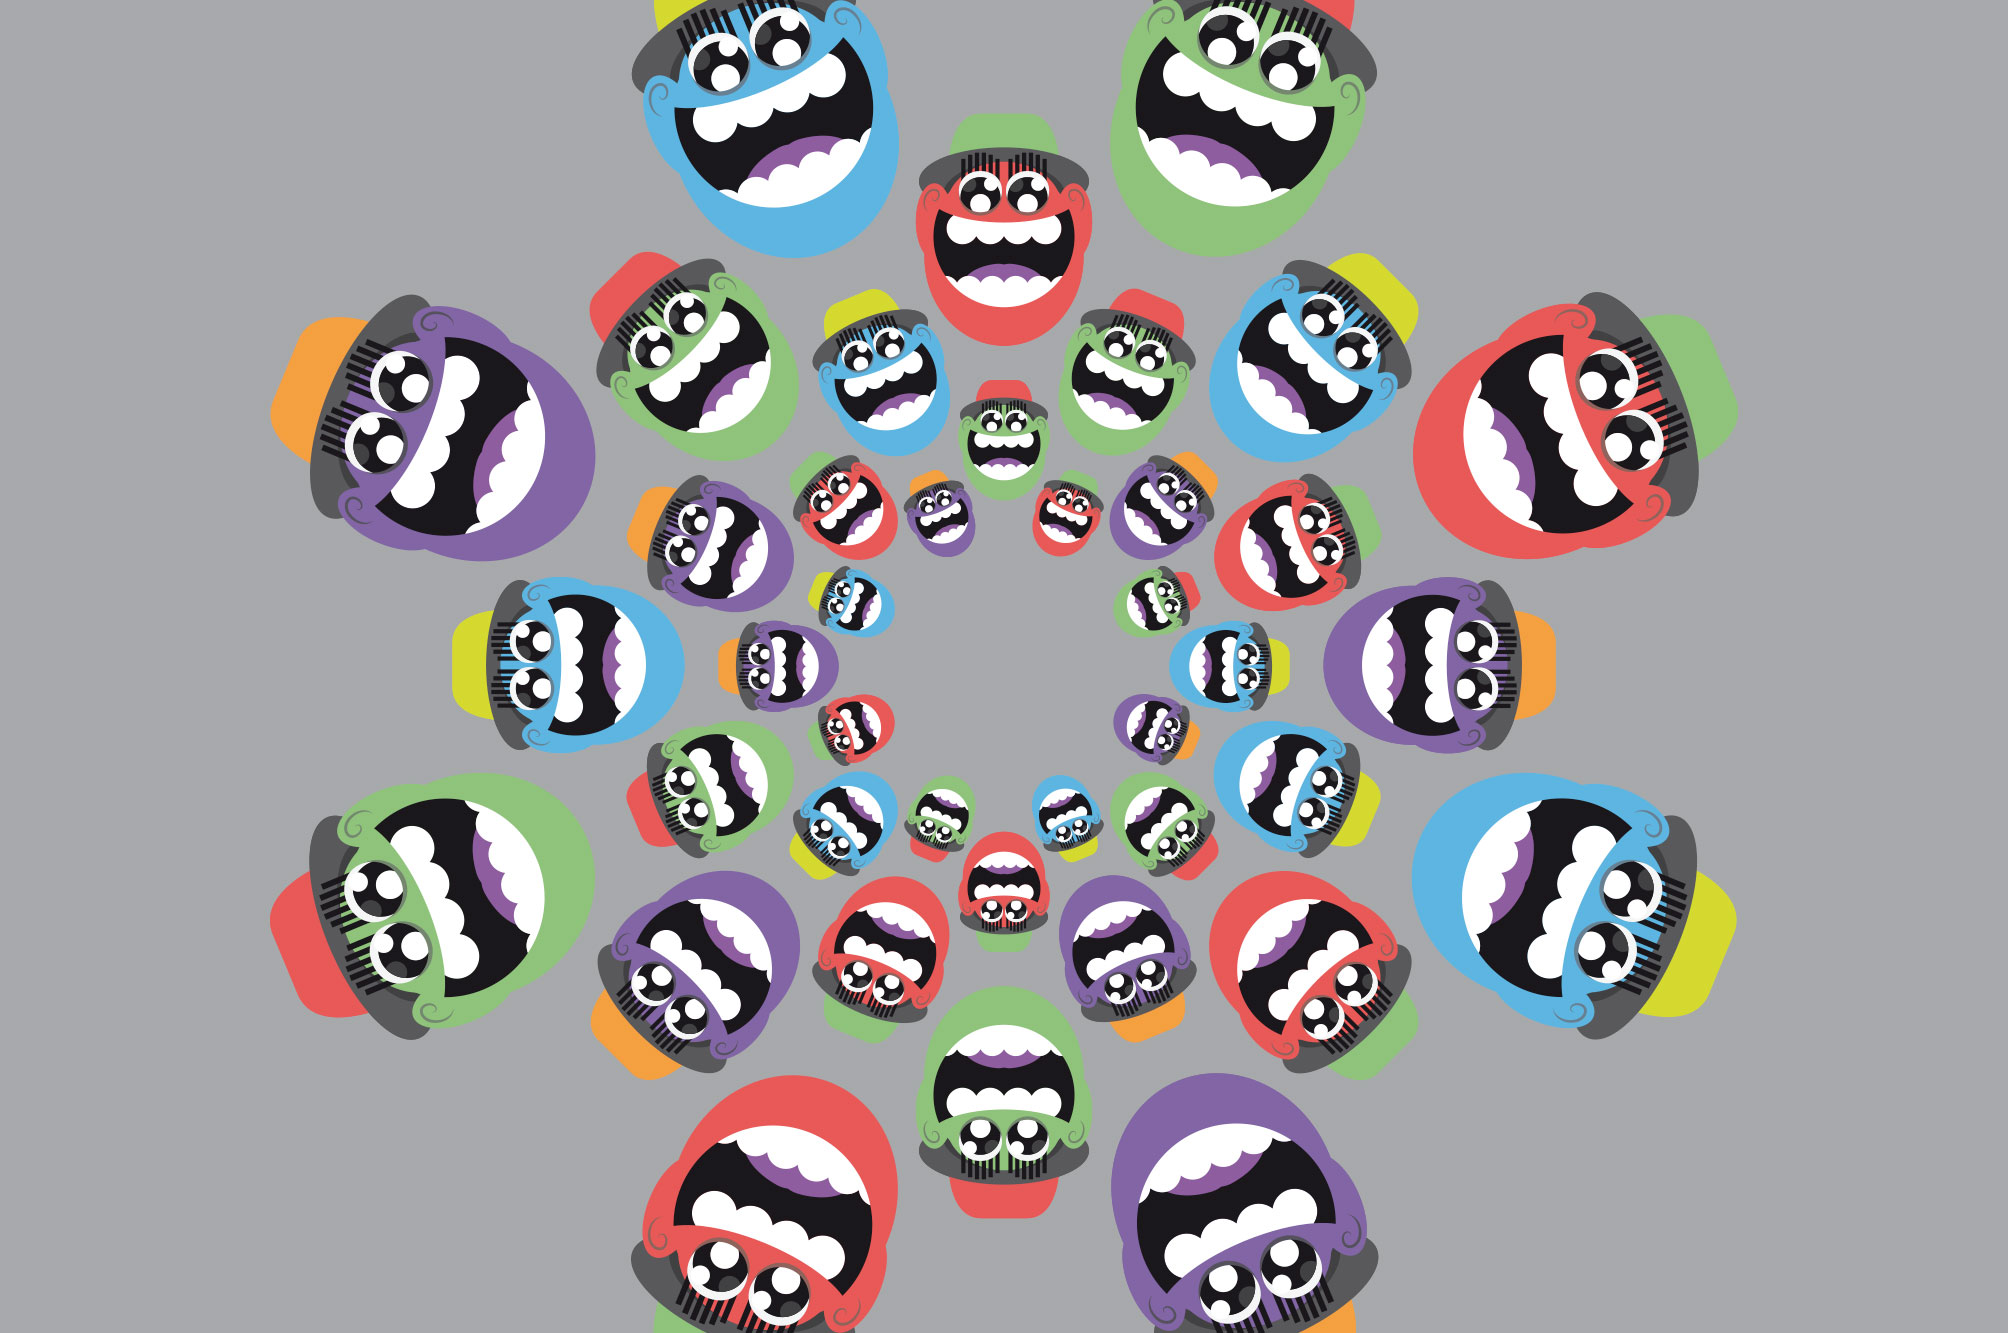 WeDesign yo illustration circle faces